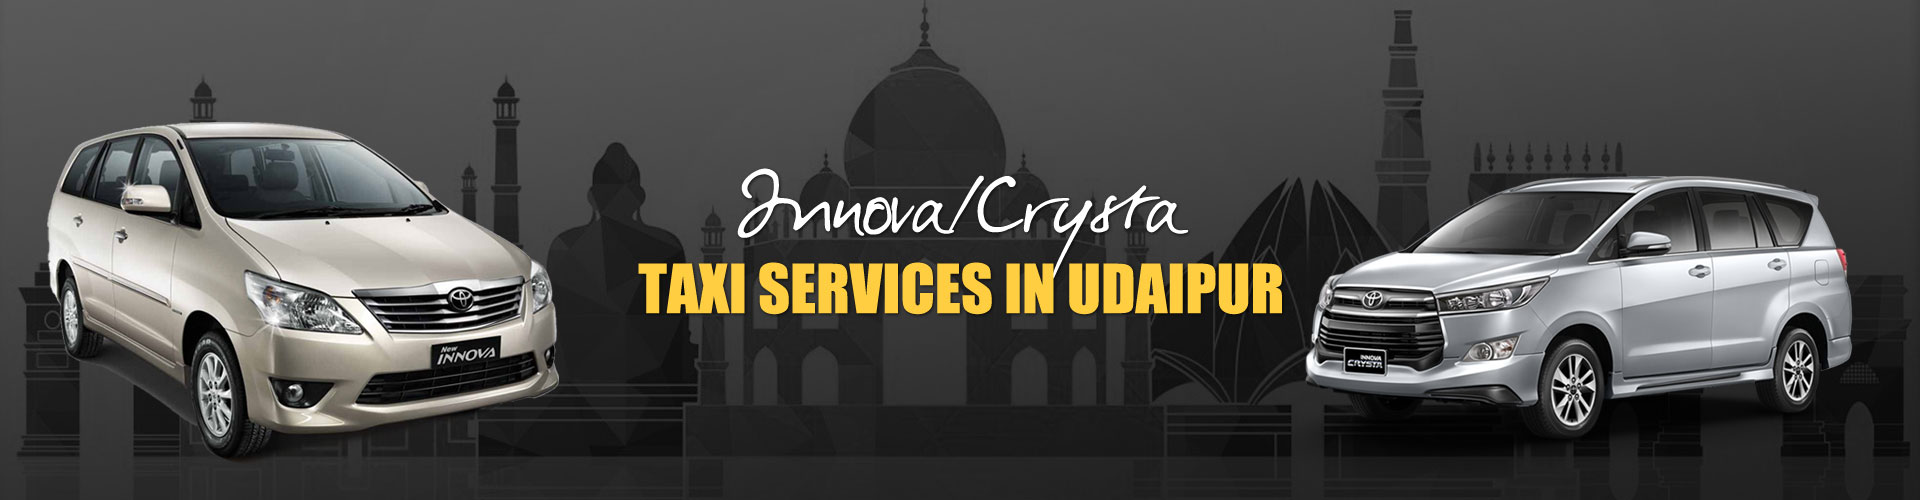 Innova Taxi Services in Udaipur - Mateshwari Tours